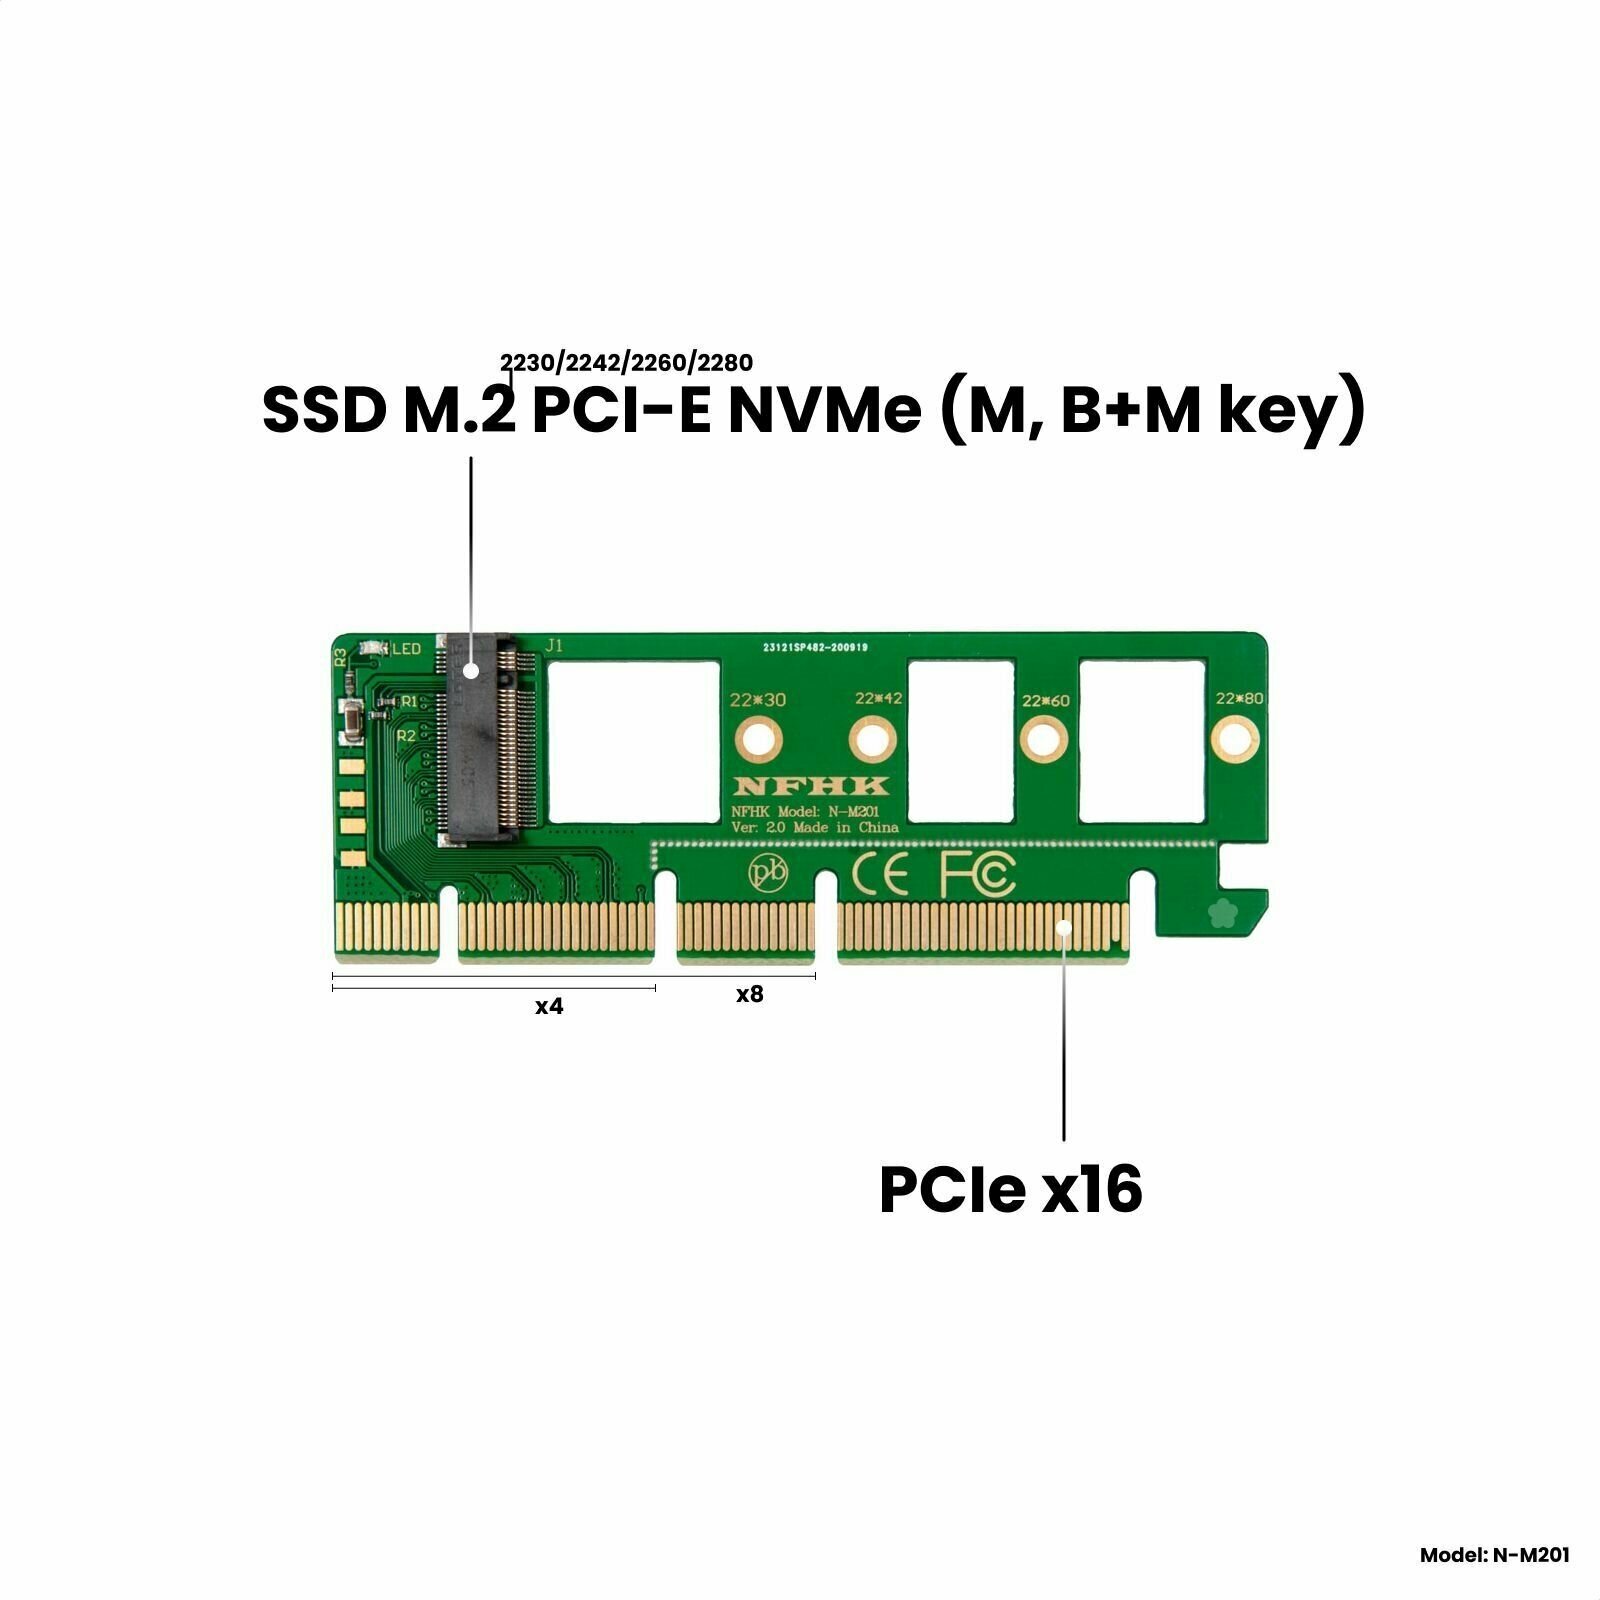 Адаптер-переходник (плата расширения) для установки SSD M.2 2230-2280 PCI-E NVMe (M B+M key) в слот PCI-E 3.0/4.0 x4/x8/x16 зеленый NHFK N-M201-G